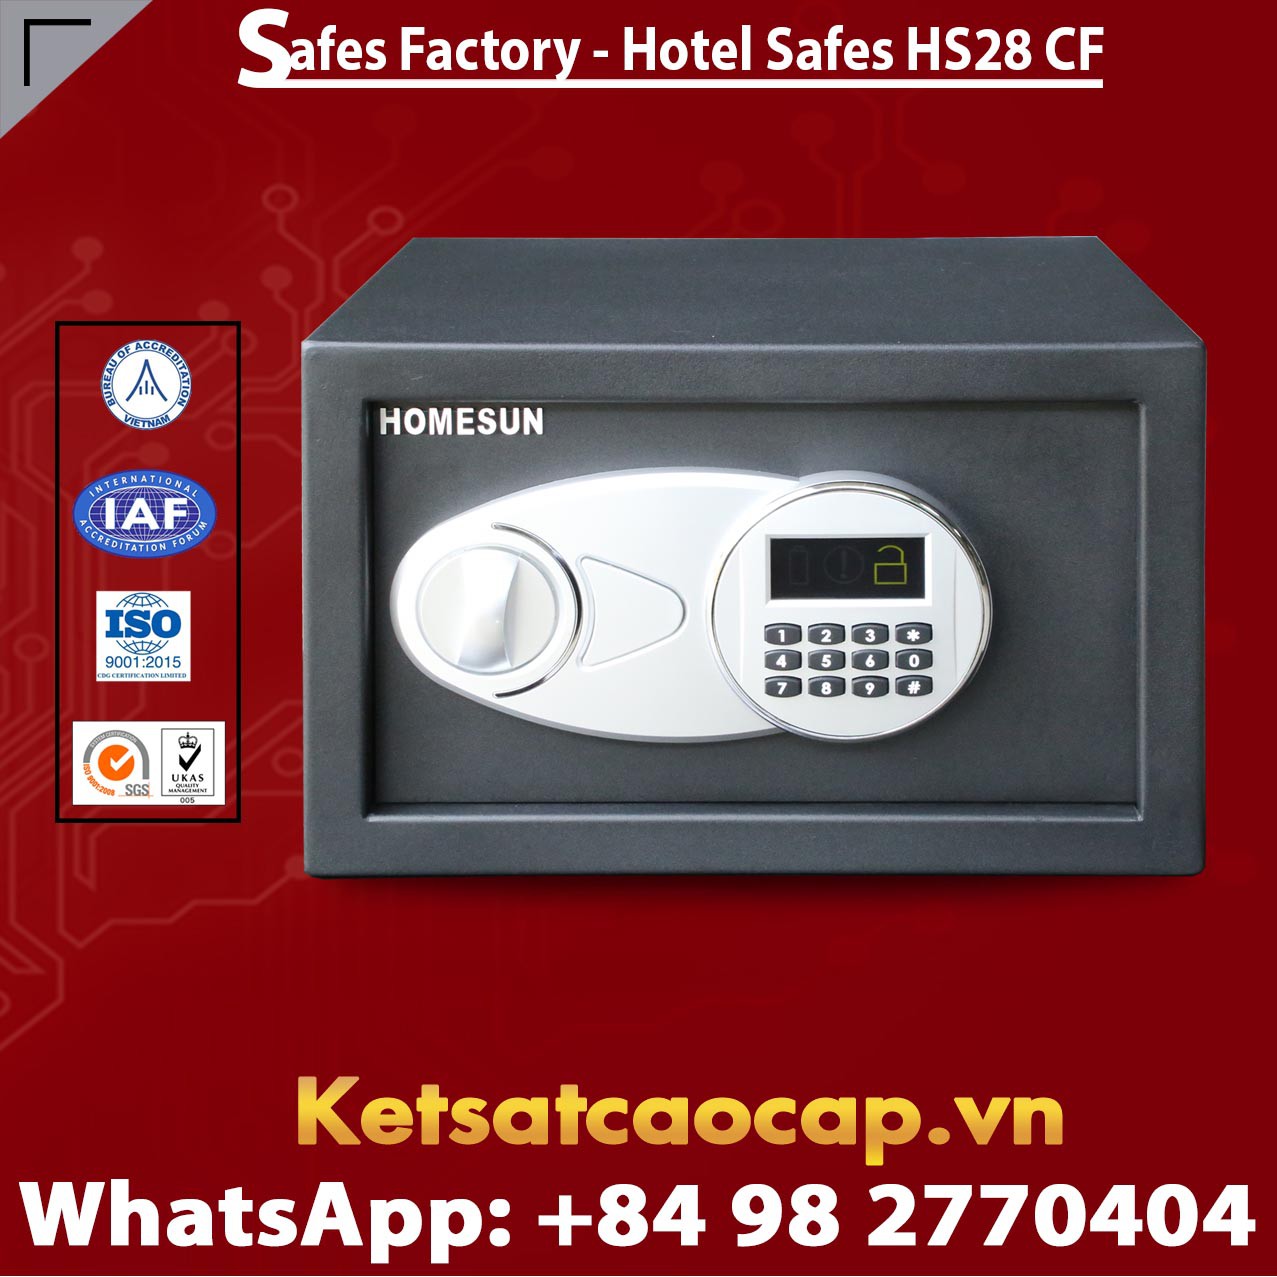 Best Hotel Safe For Home HOMESUN HS28 CF